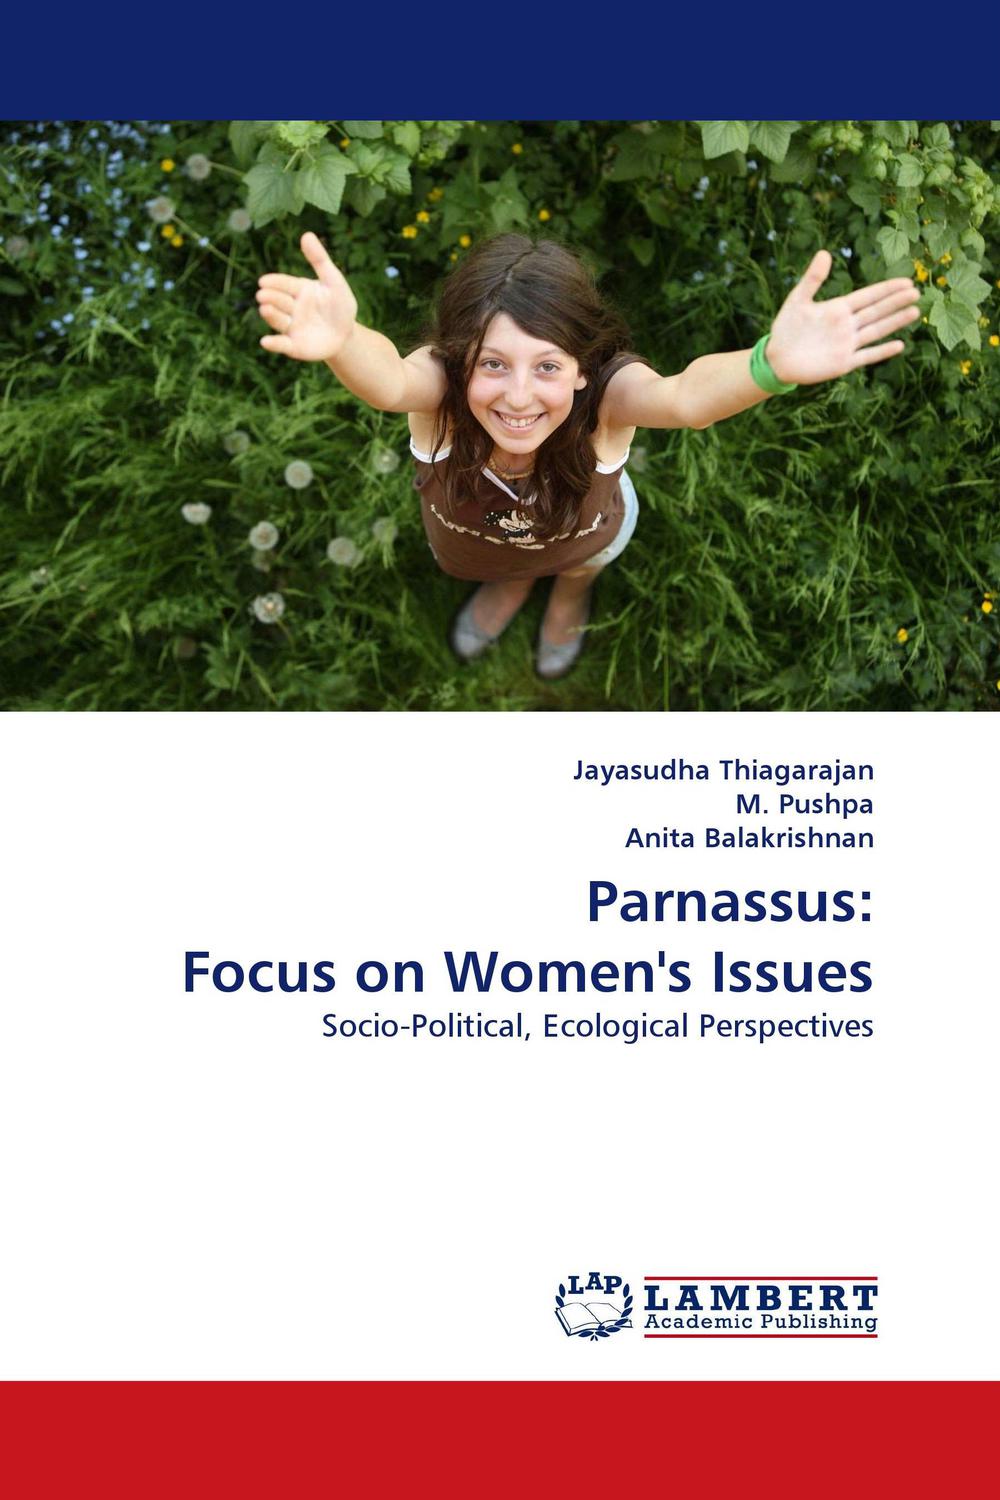 Parnassus: Focus on Women''s Issues - Jayasudha Thiagarajan, M. Pushpa, Anita Balakrishnan,,